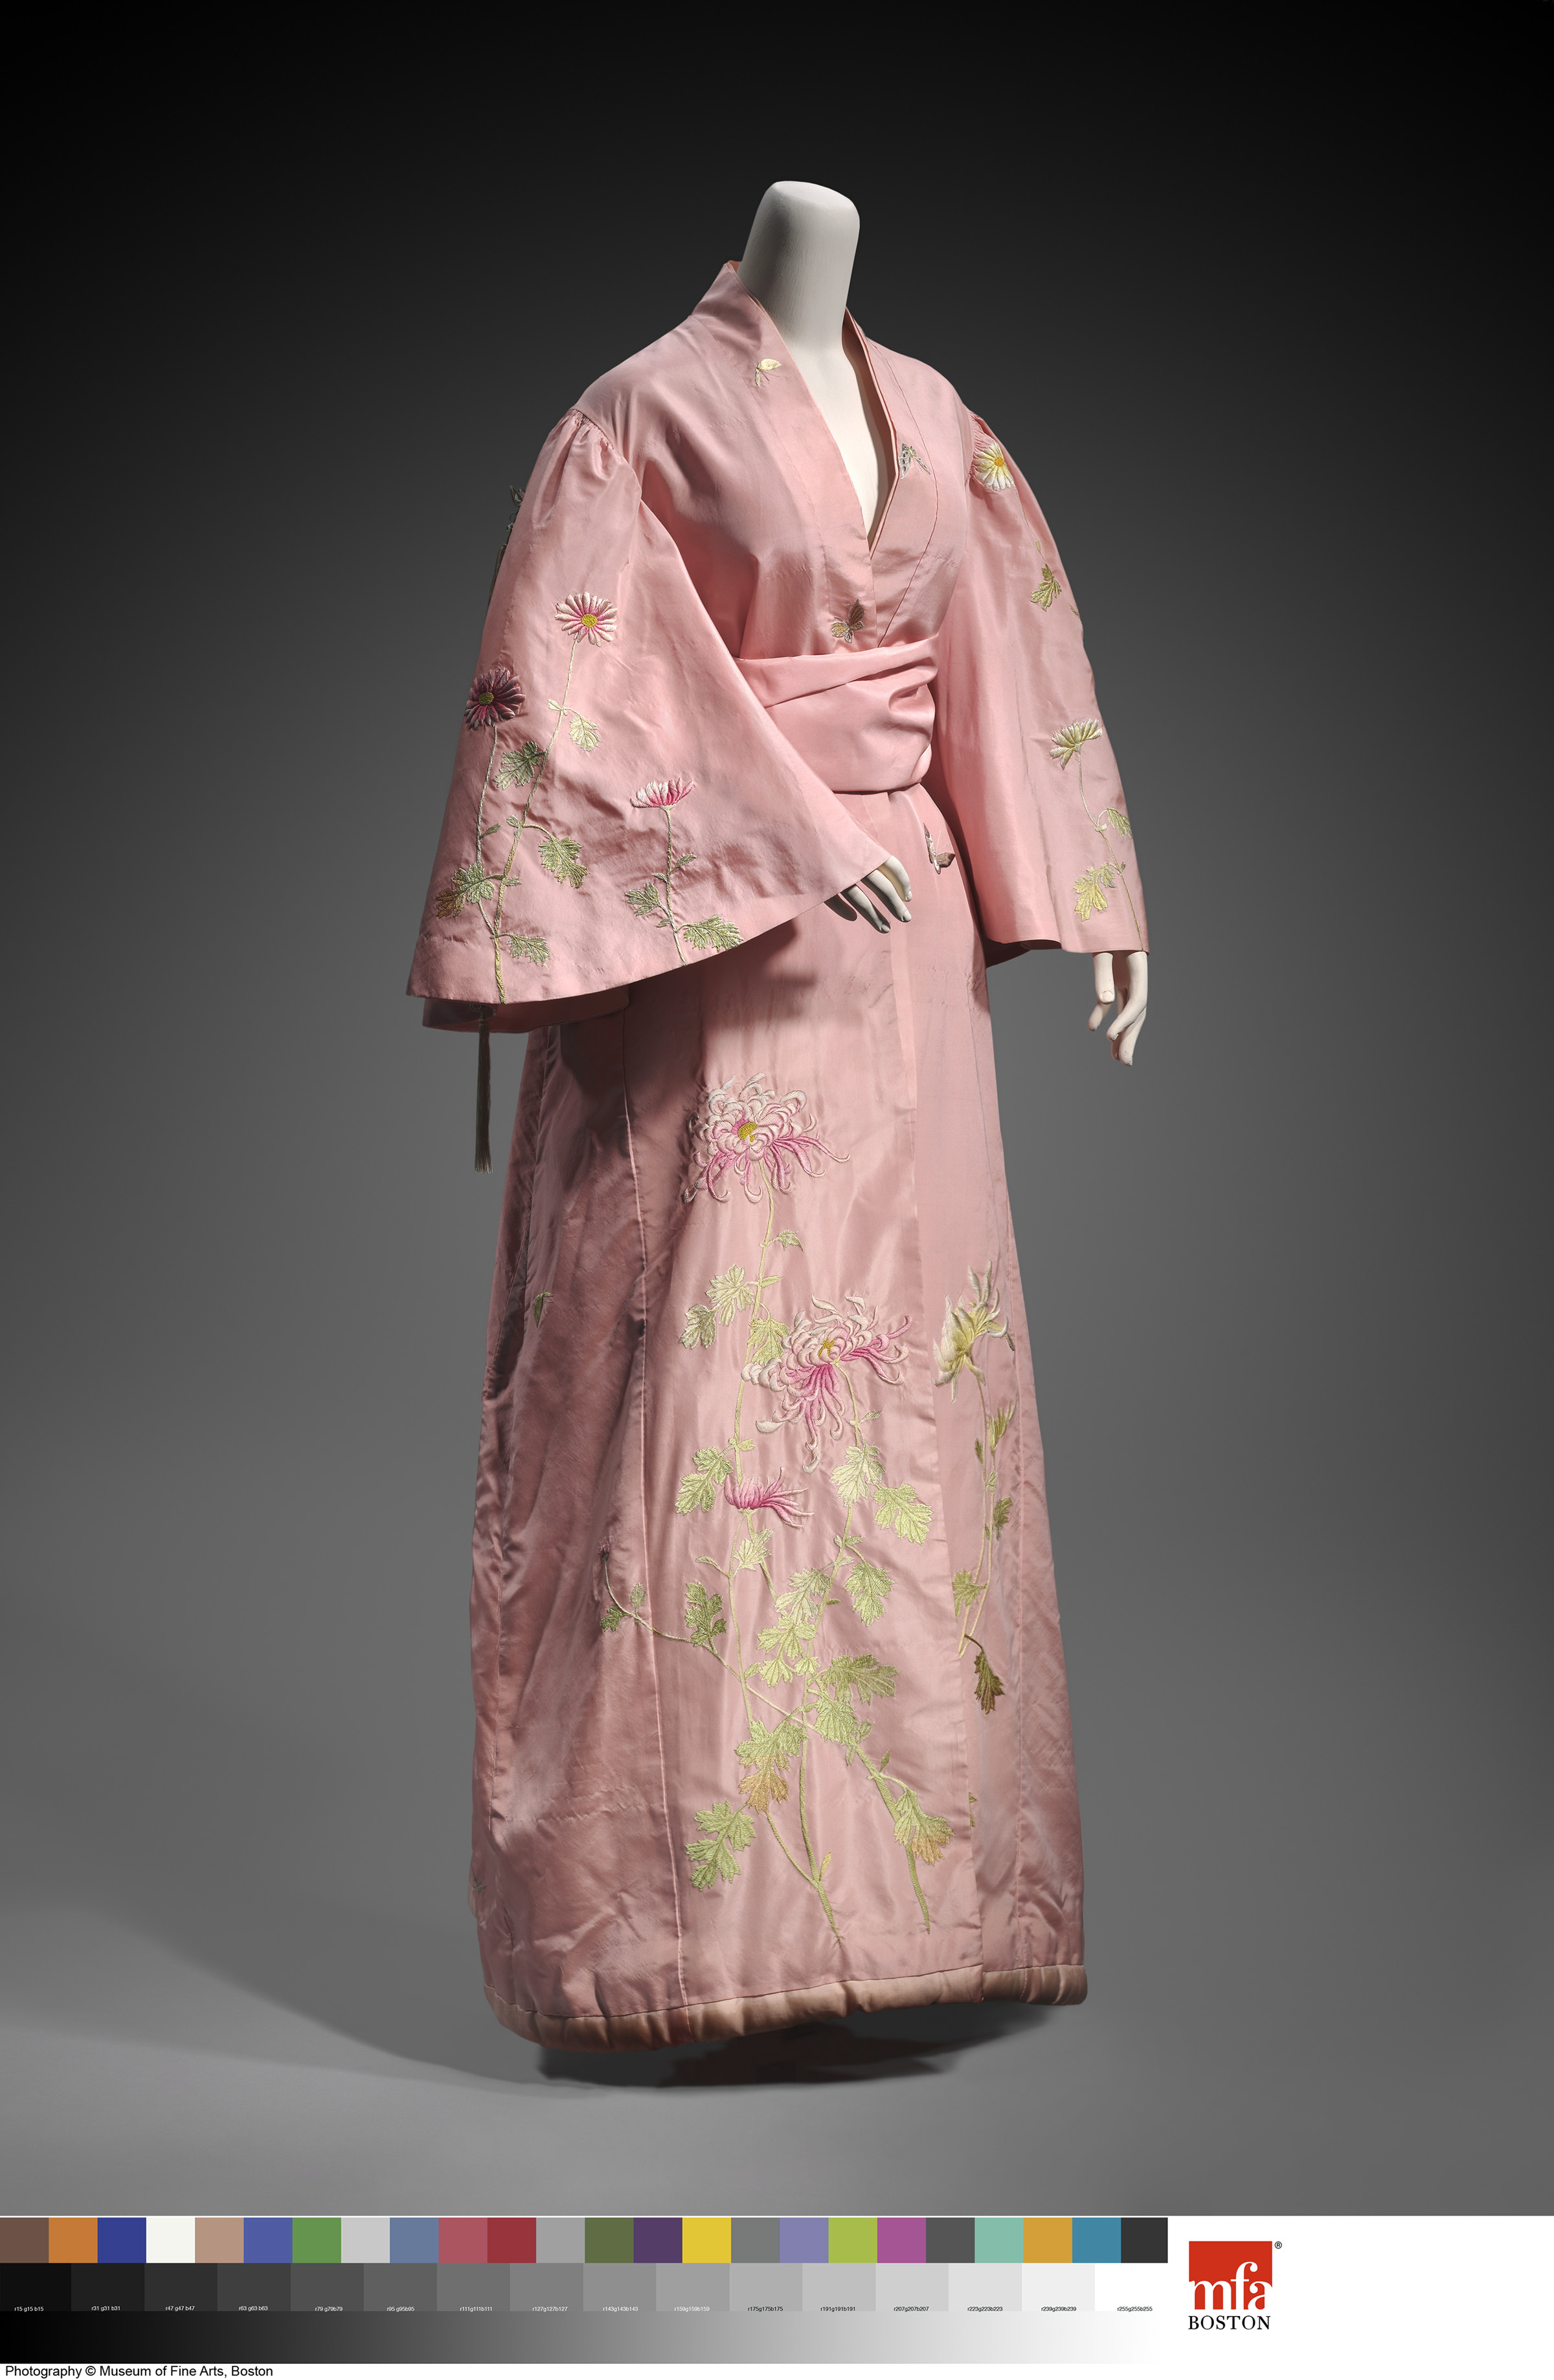 Takashimaya_Woman\'s dressing gown_MFA, Boston_2001.933